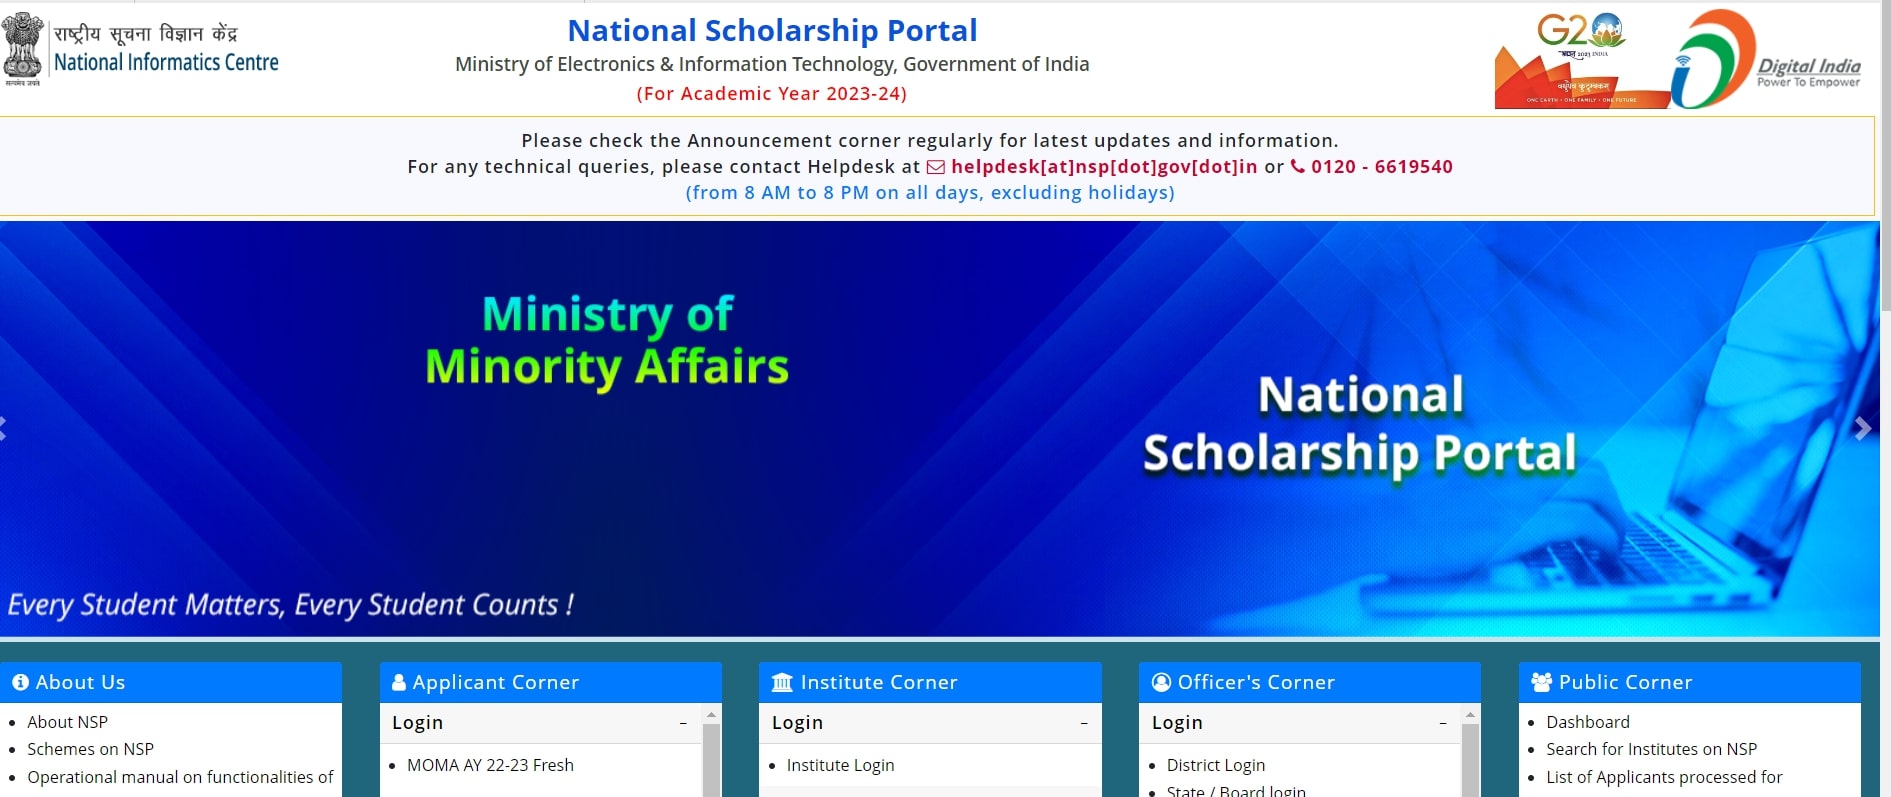  National Scholarship Portal Merit List